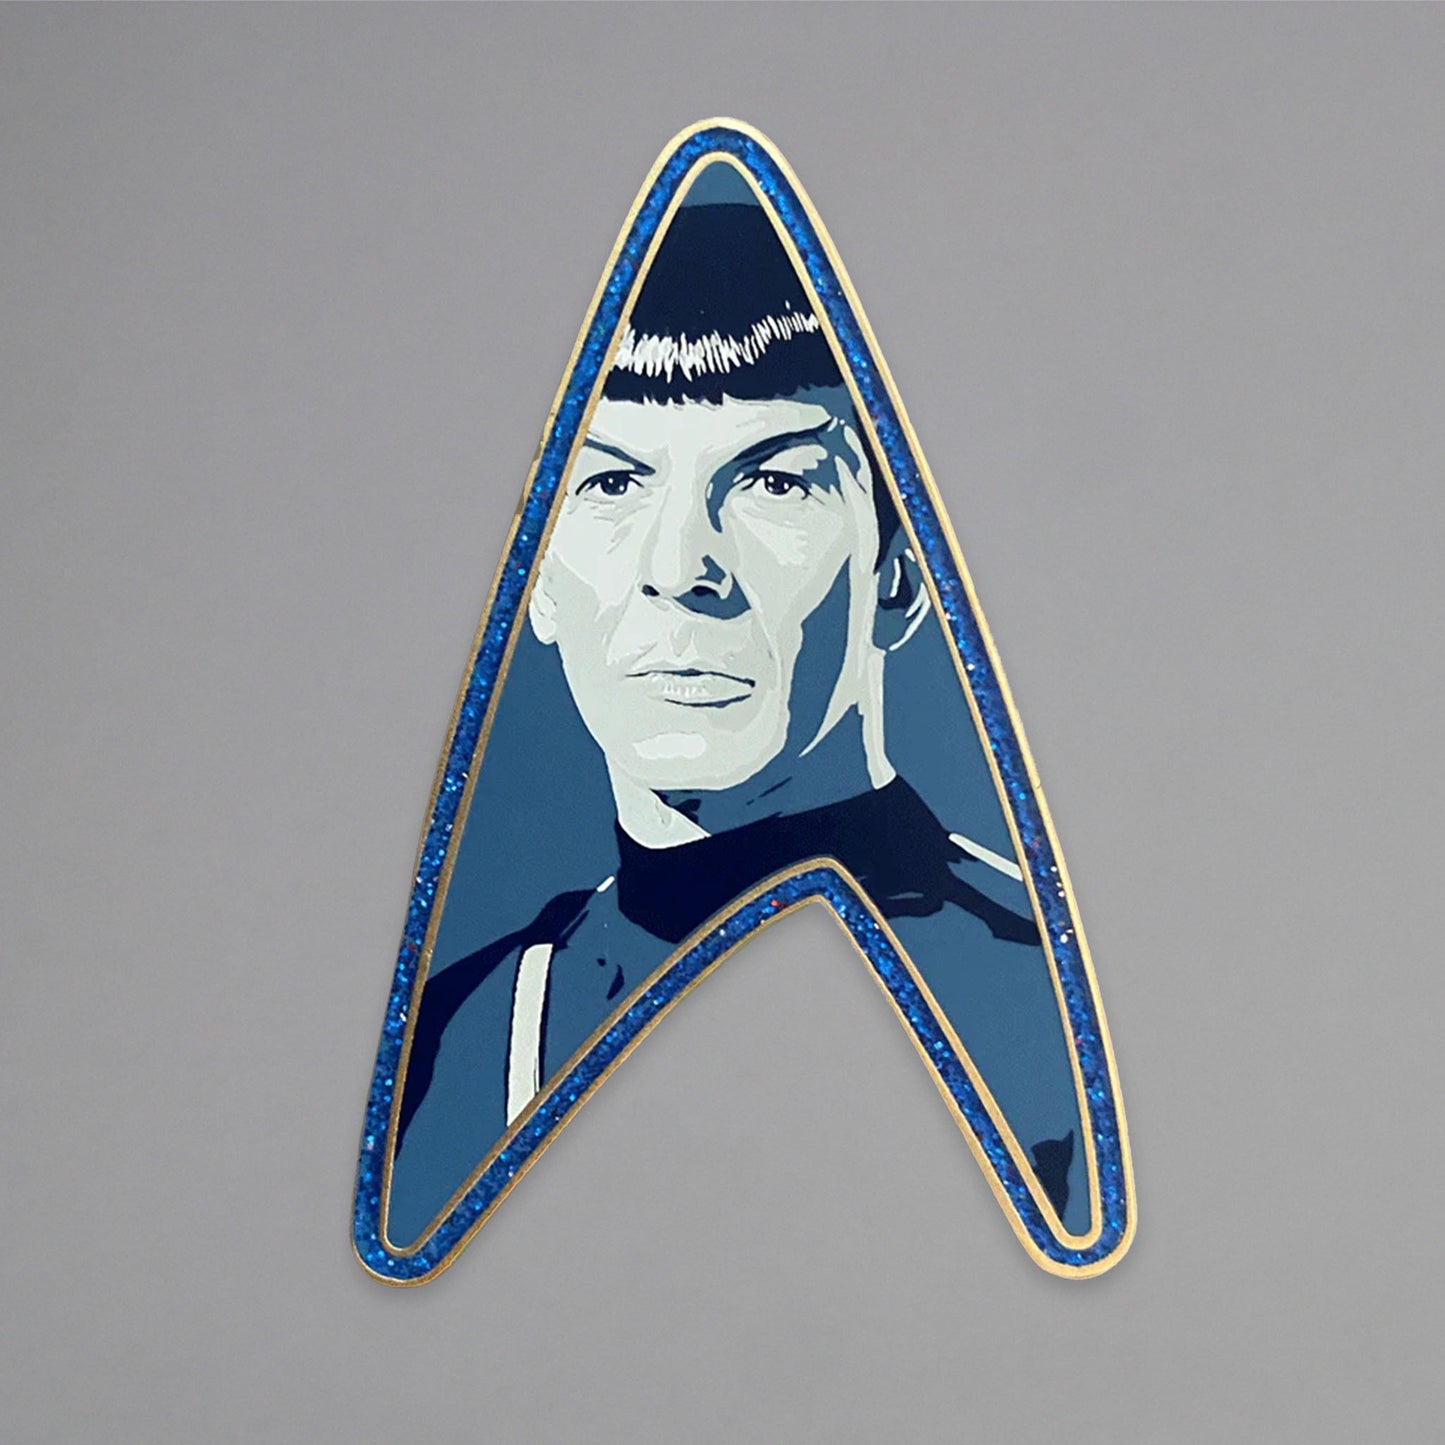 Mr Spock's Delta (Star Trek: The Original Series) Pin